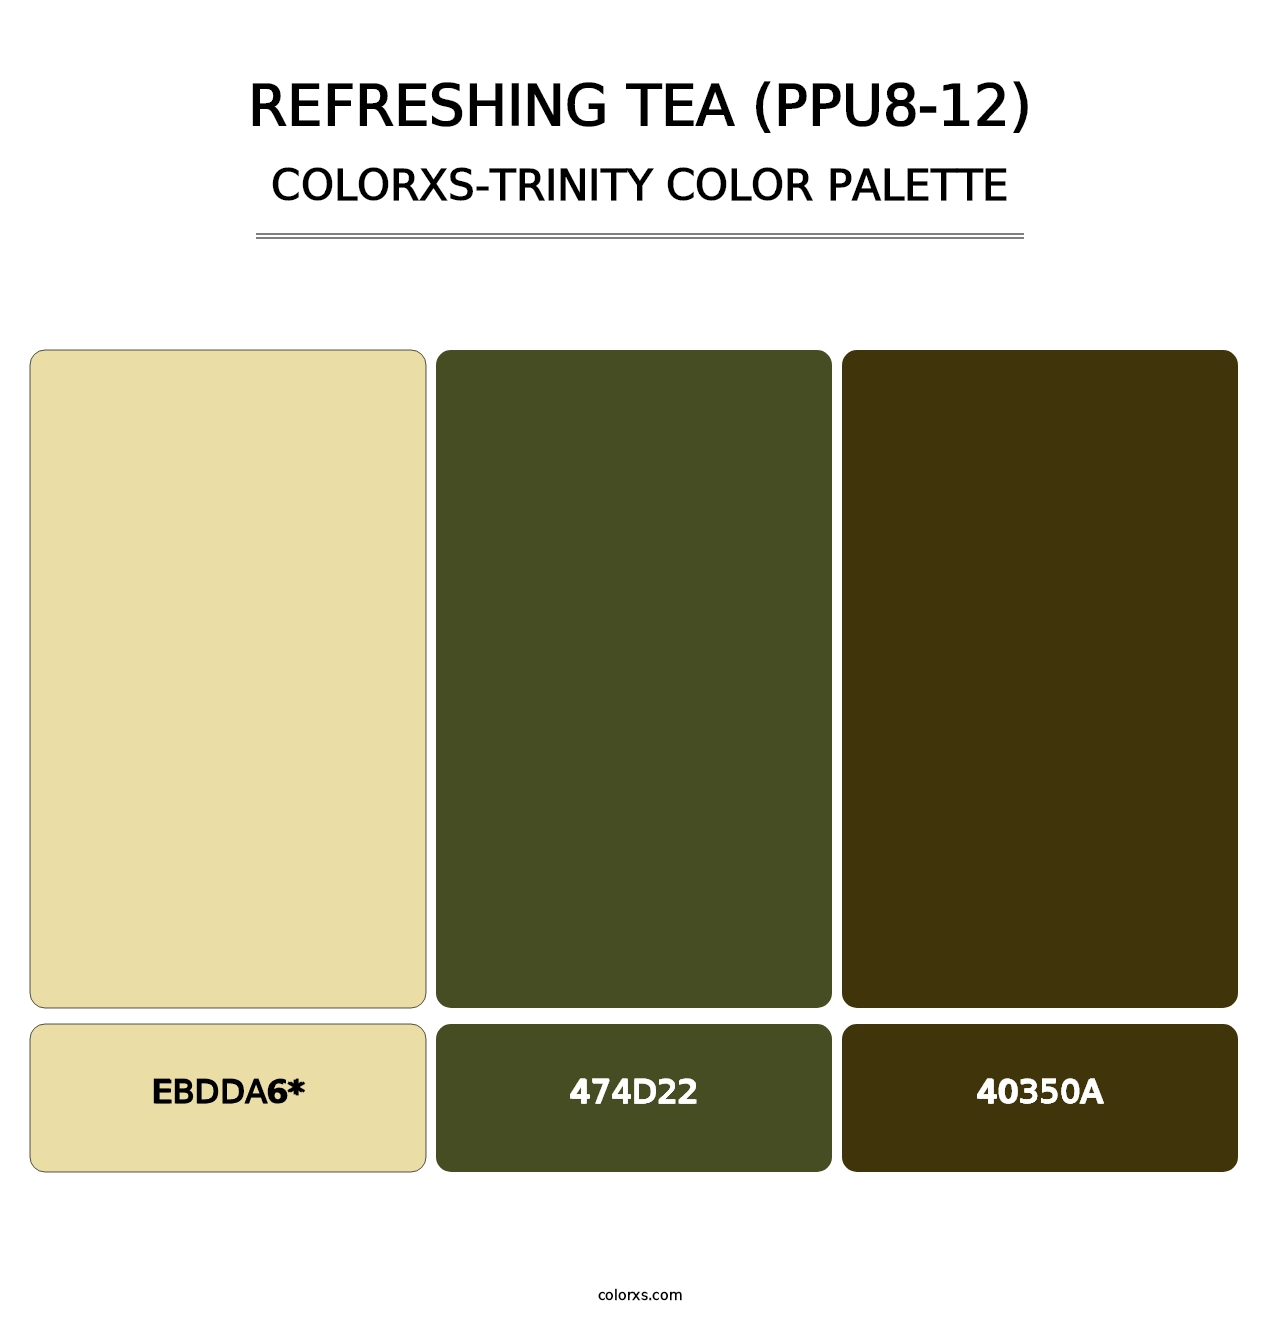 Refreshing Tea (PPU8-12) - Colorxs Trinity Palette